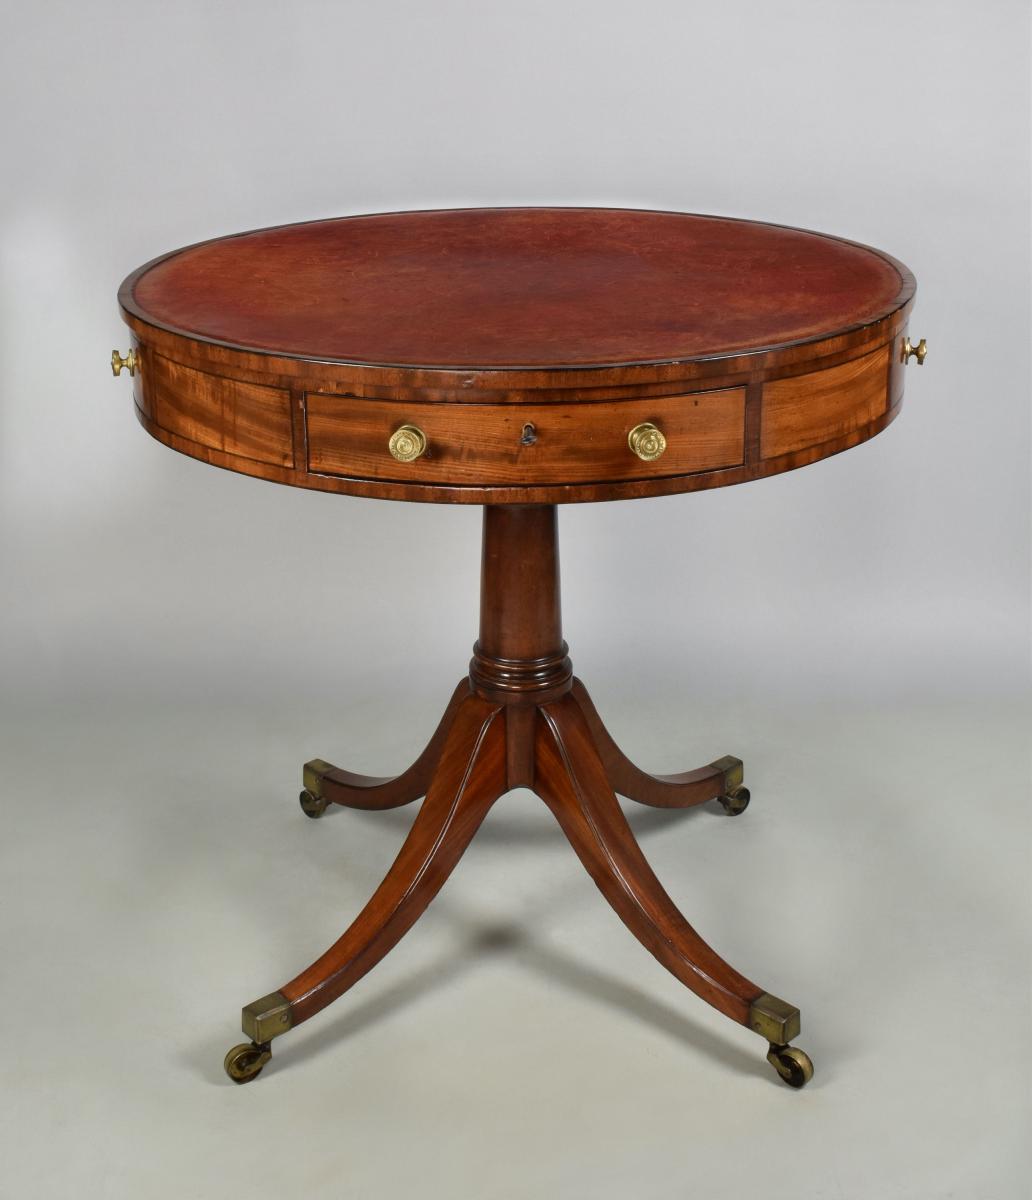 A small George III mahogany revolving drum table, c.1800